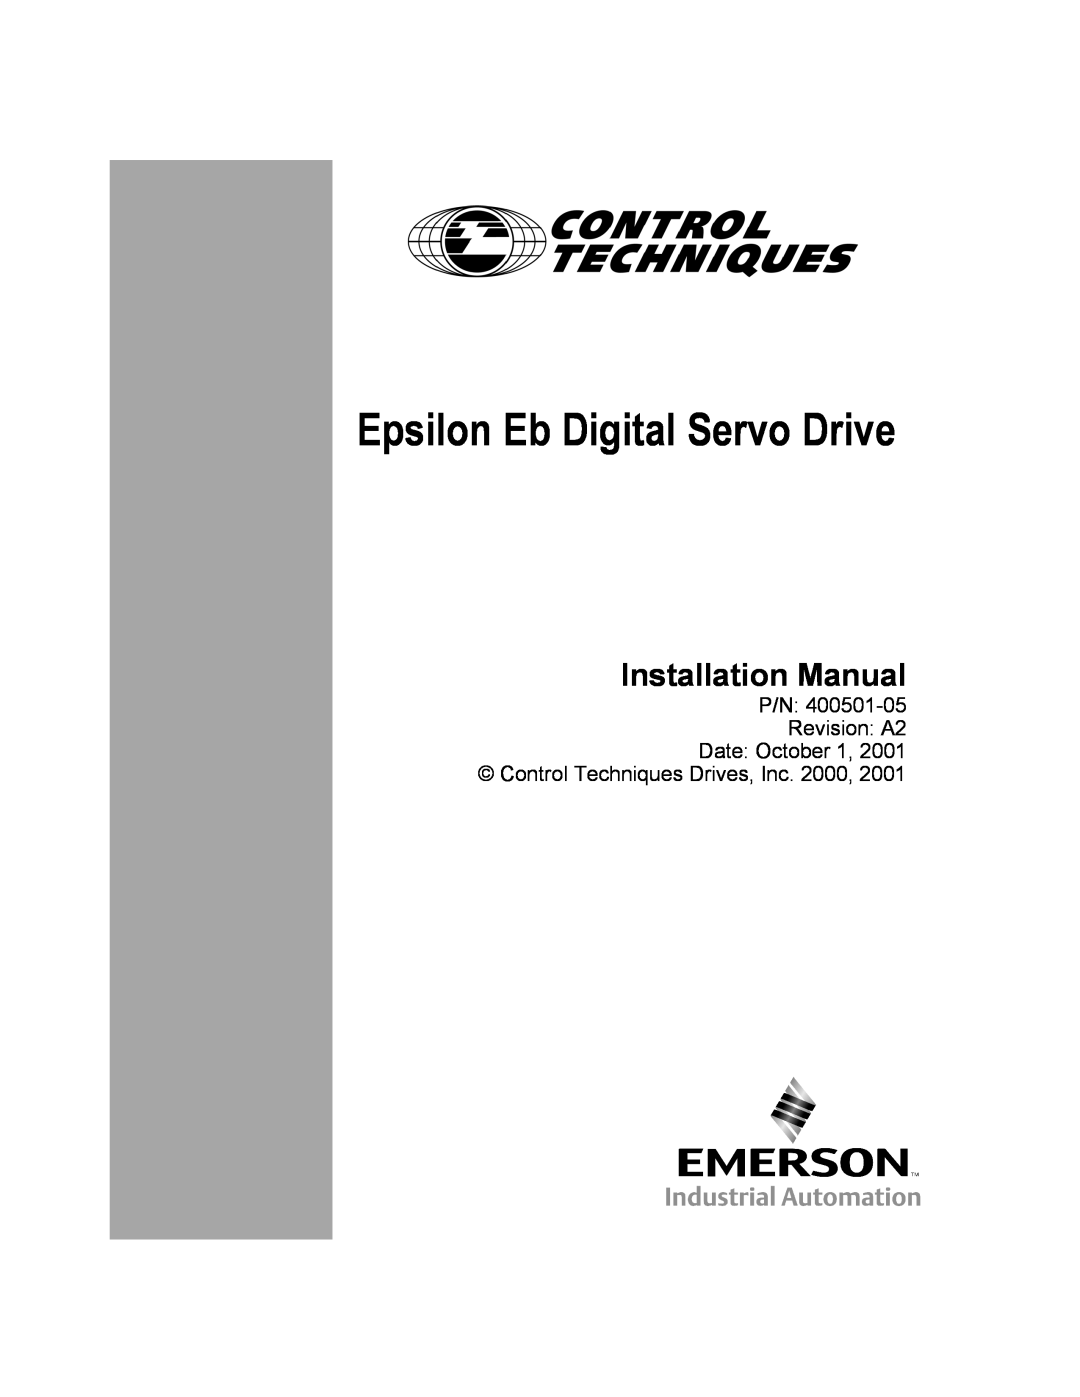 Emerson Epsilon Eb Digital Servo Drive, 400501-05 installation manual Installation Manual 